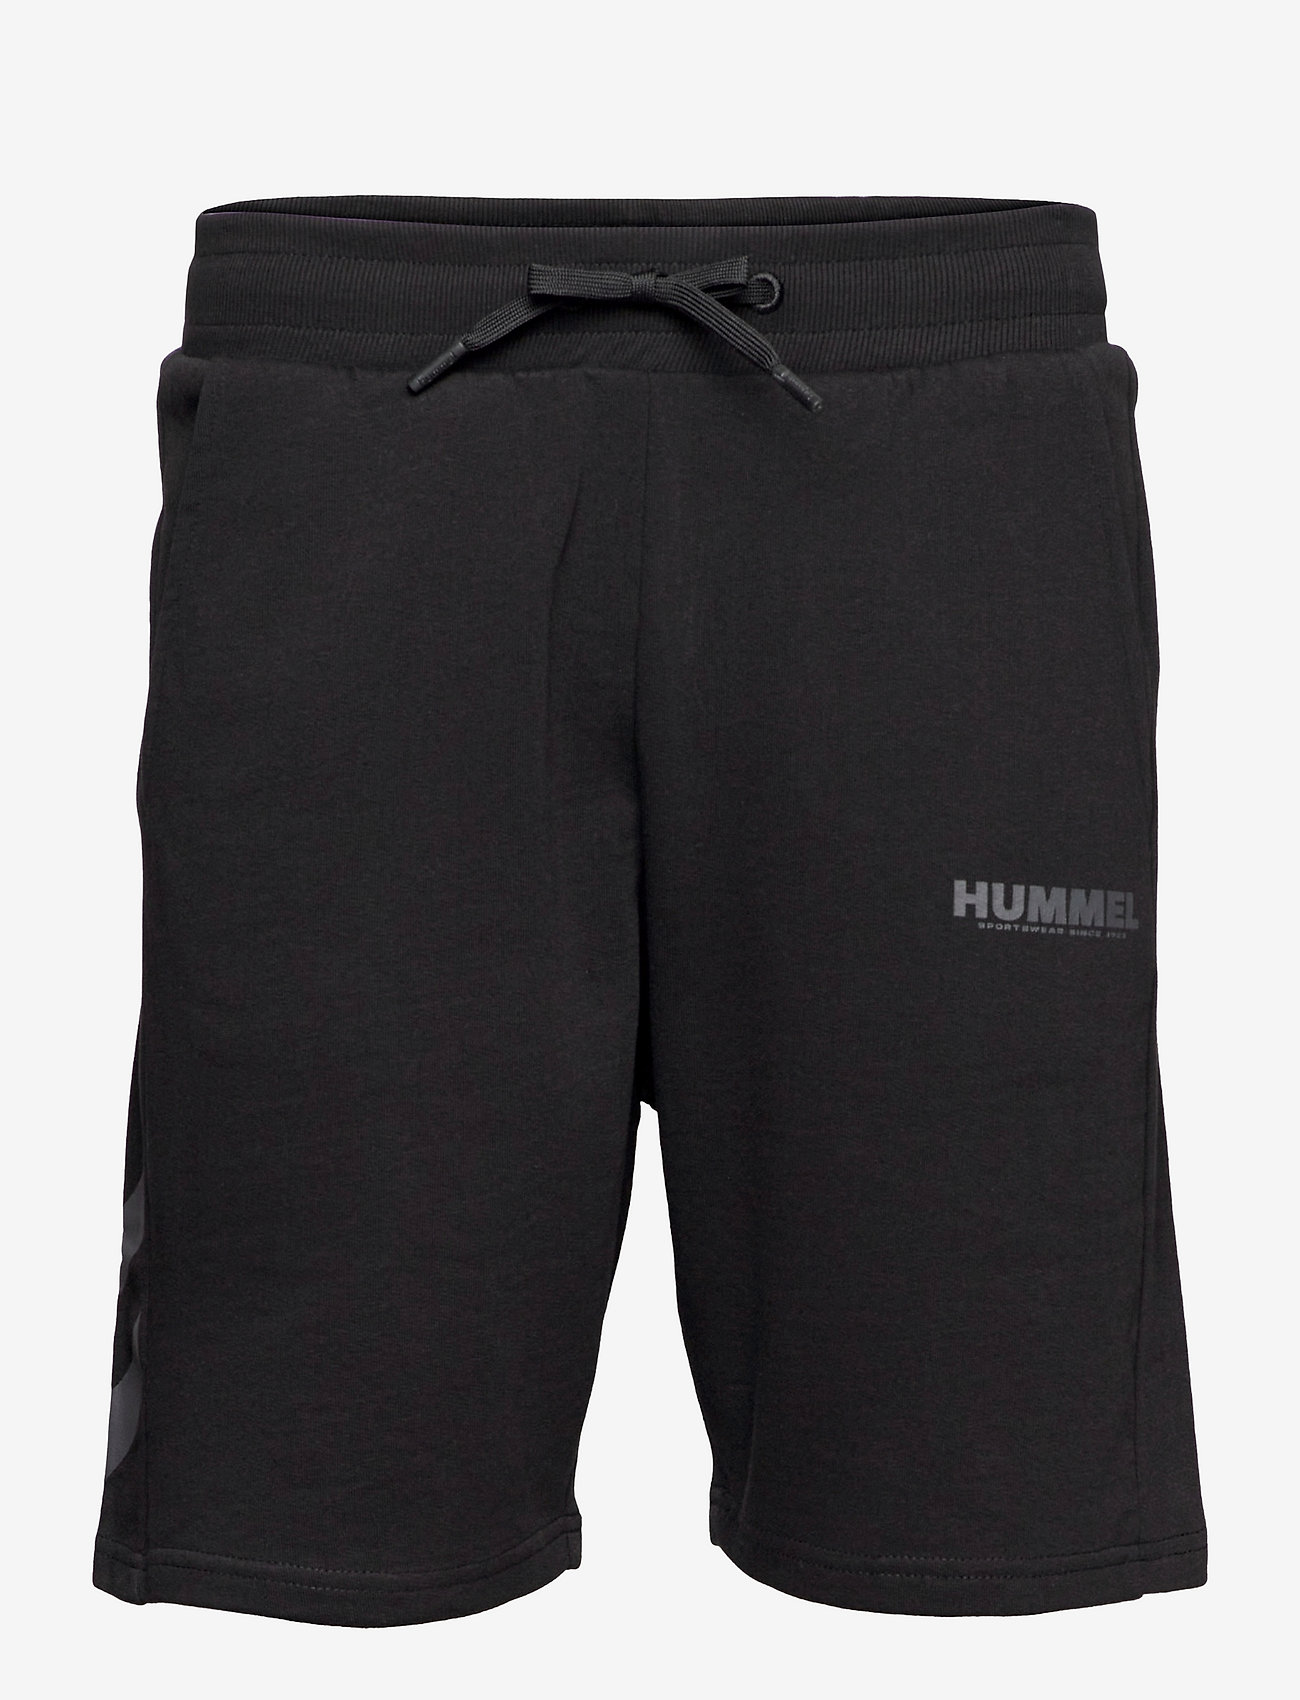 Hummel - hmlLEGACY SHORTS - training shorts - black - 1